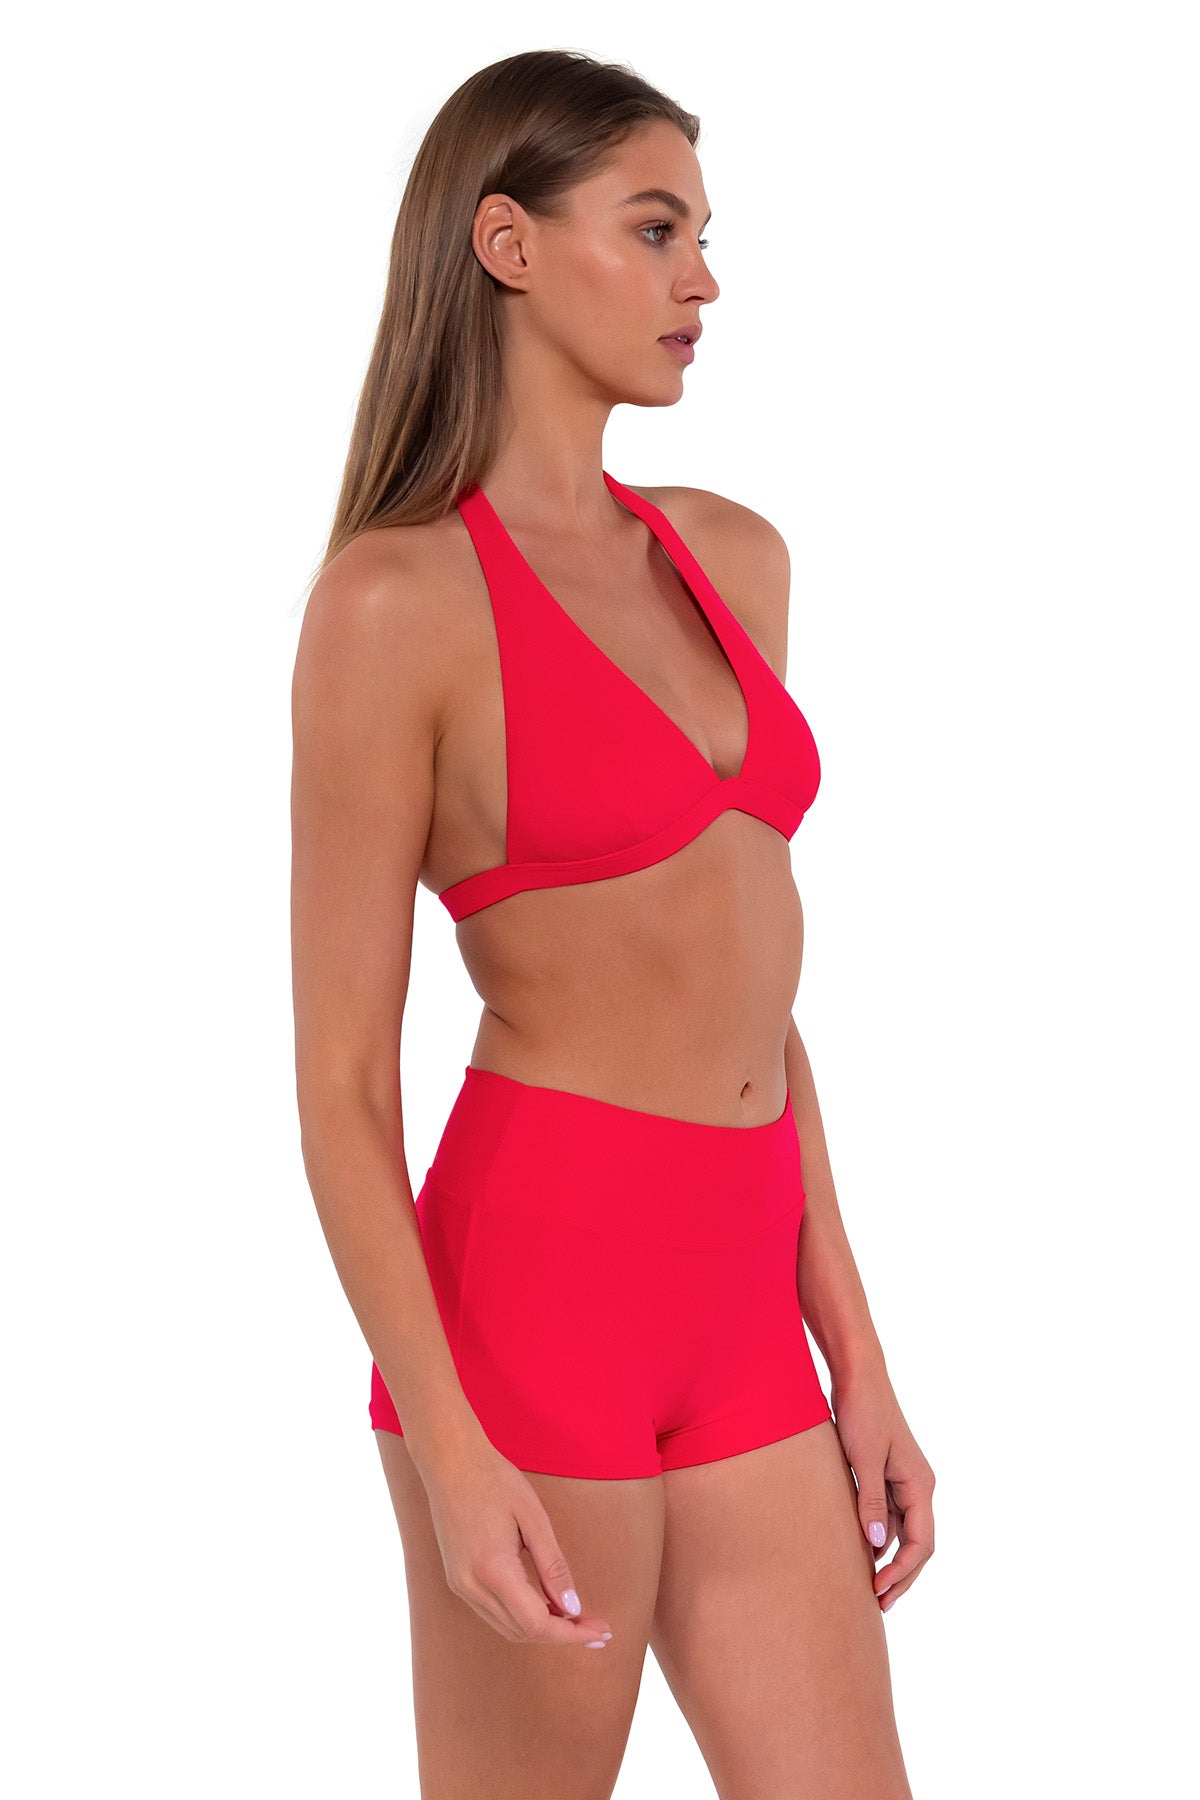 Side pose #1 of Daria wearing Sunsets Geranium Kinsley Swim Short with matching Faith Halter bikini top